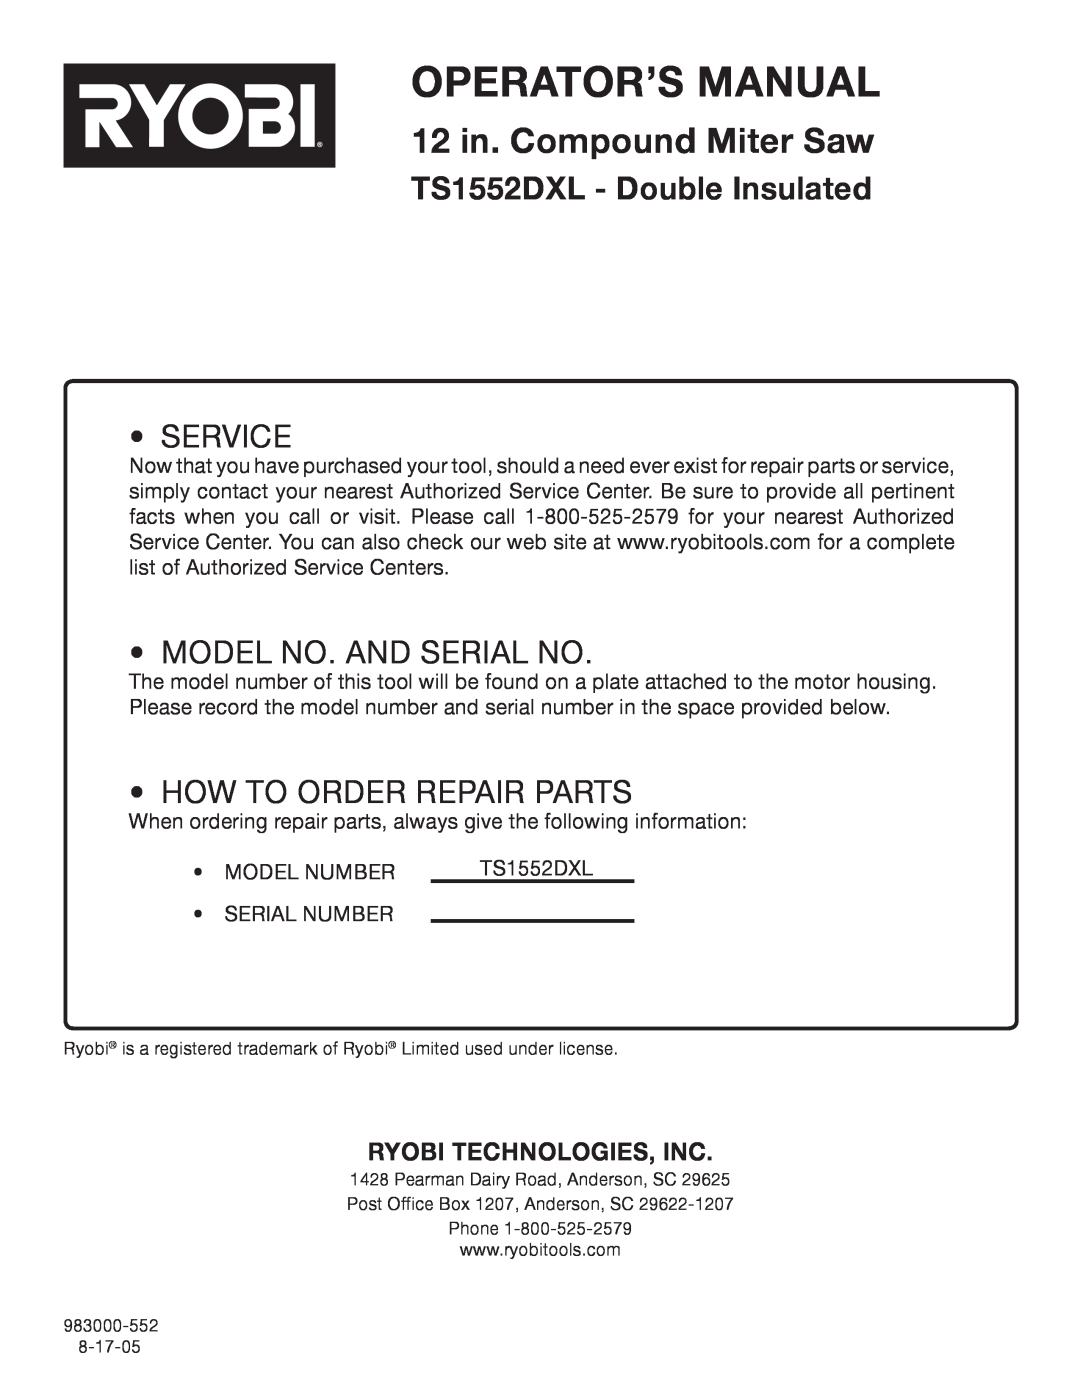 Ryobi Ryobi Technologies, Inc, Operator’S Manual, 12 in. Compound Miter Saw, TS1552DXL - Double Insulated, Service 